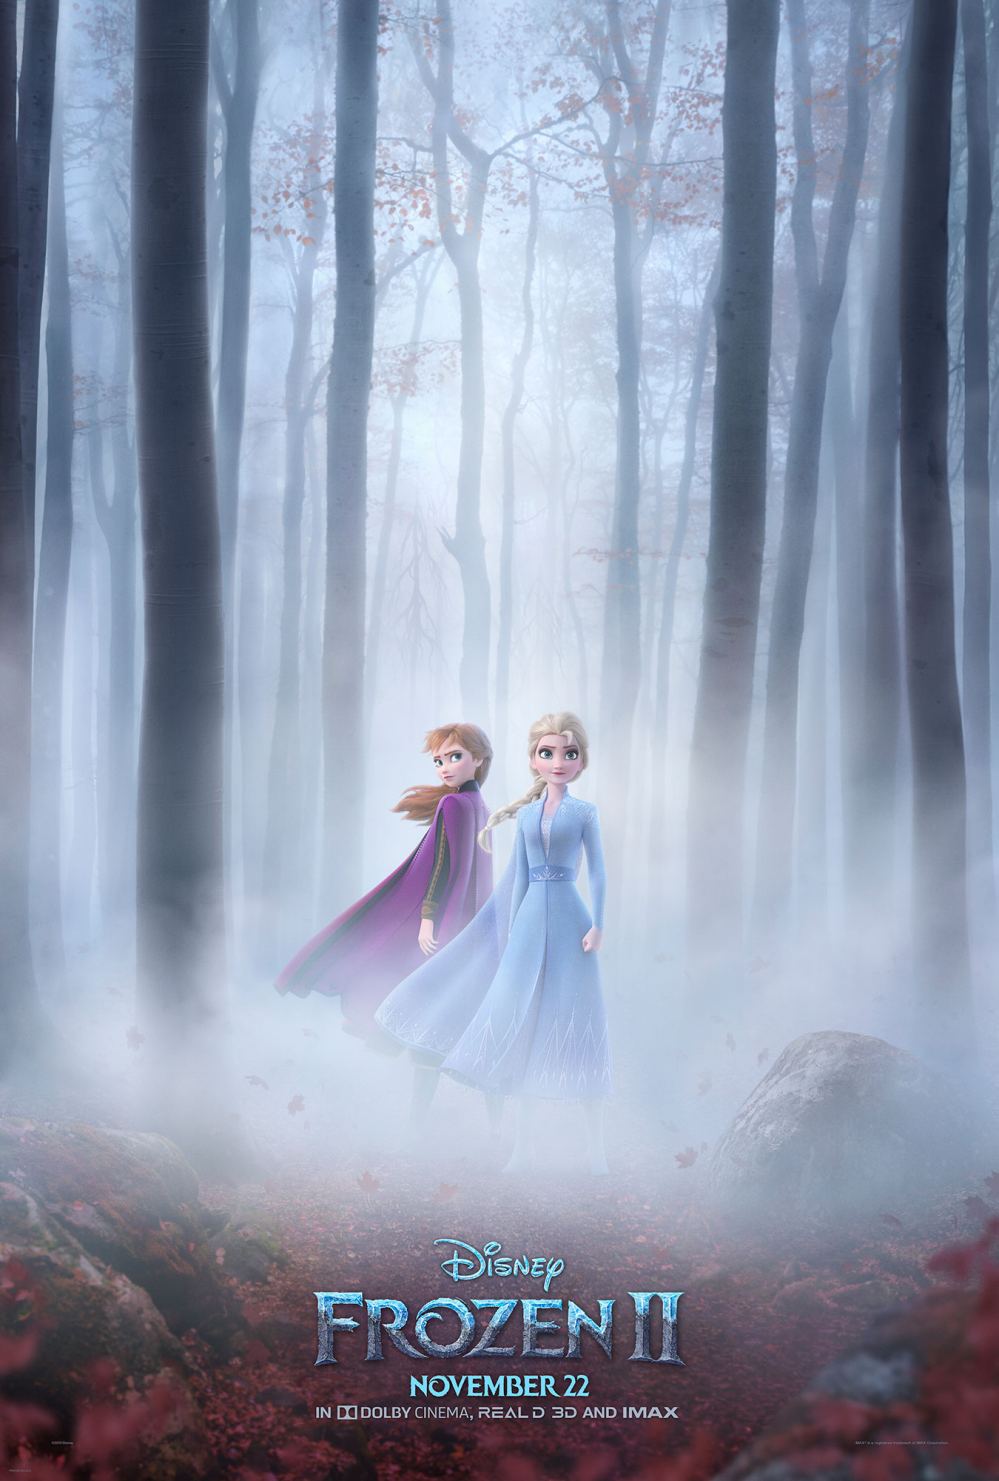 Frozen 2 Poster Trailer Debut